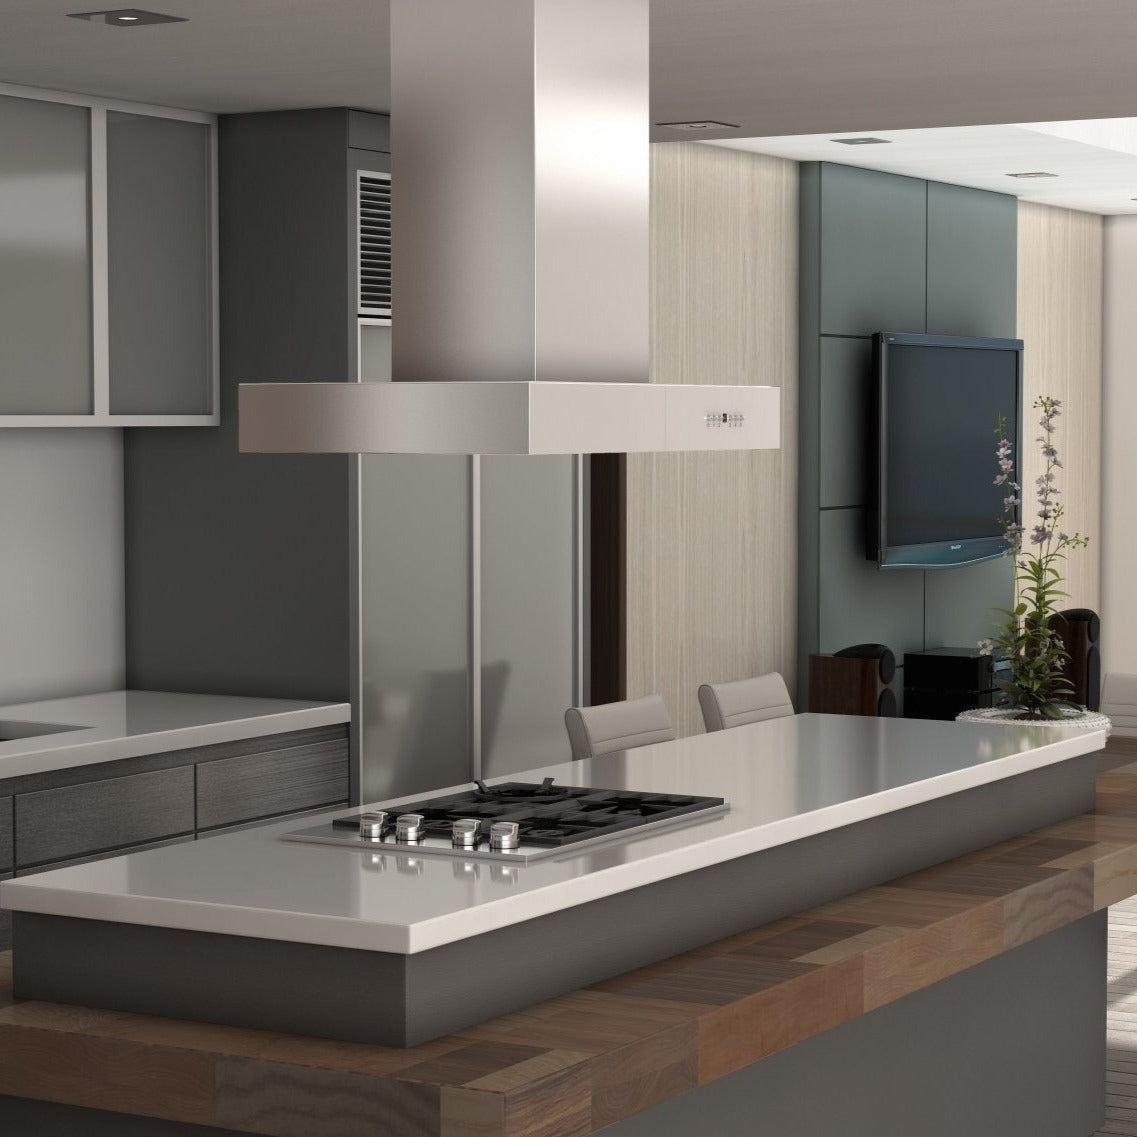 ZLINE Ducted Professional Island Mount Range Hood in Stainless Steel (KECOMi) rendering in a luxury kitchen.